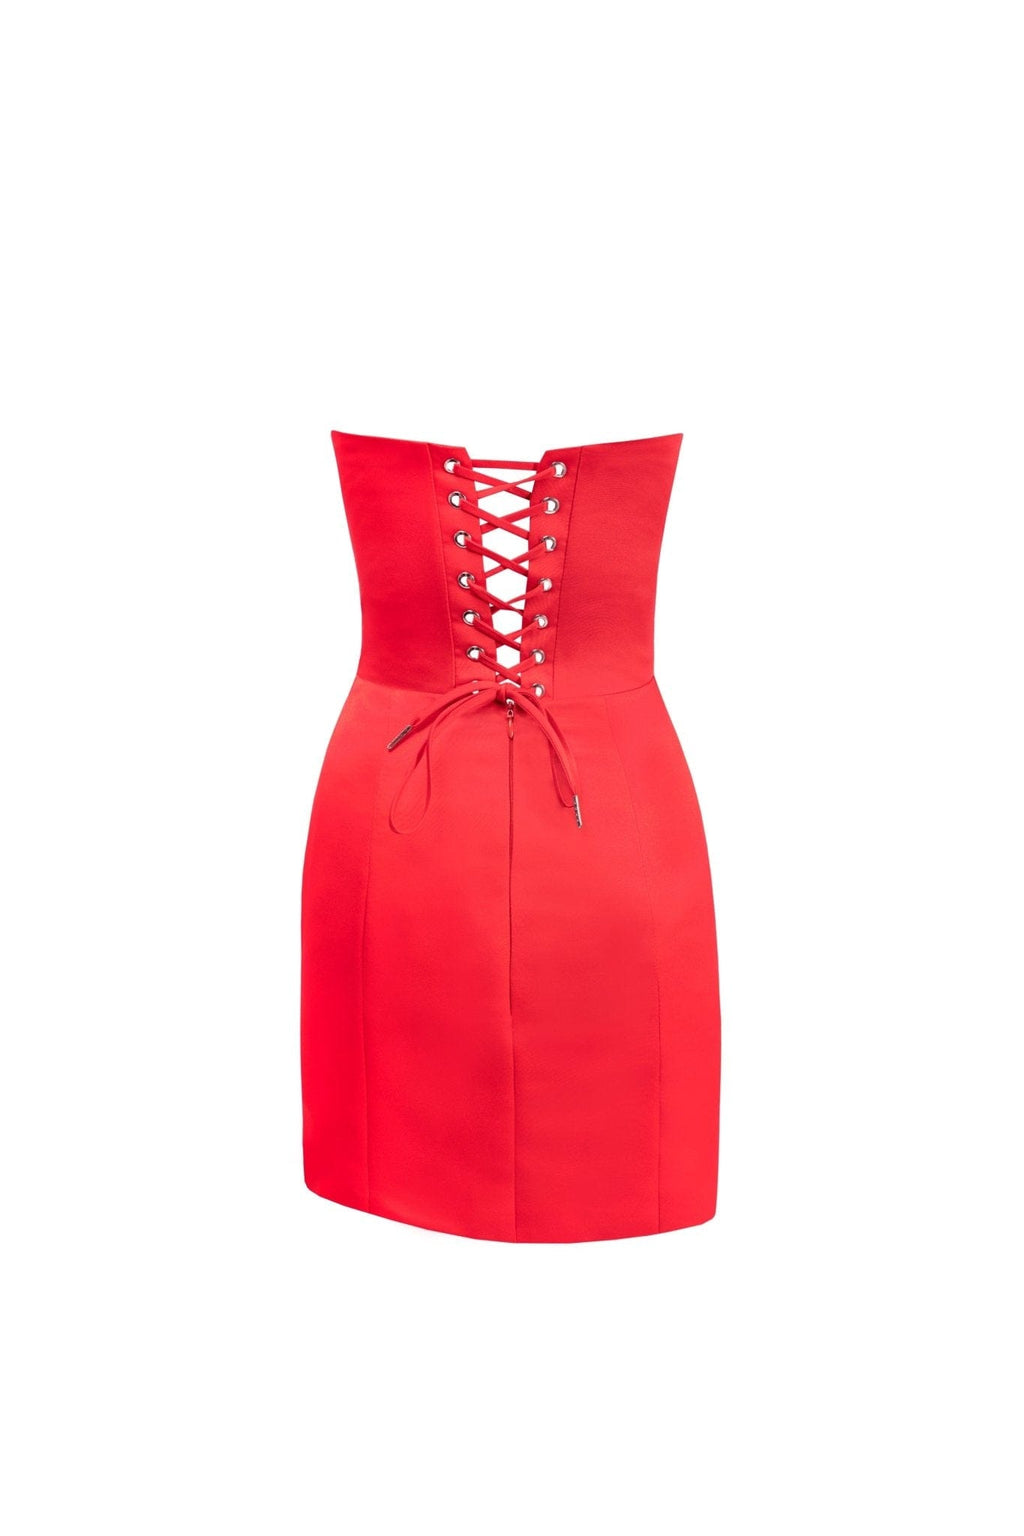 Gorgeous scarlet red mini dress - Milla